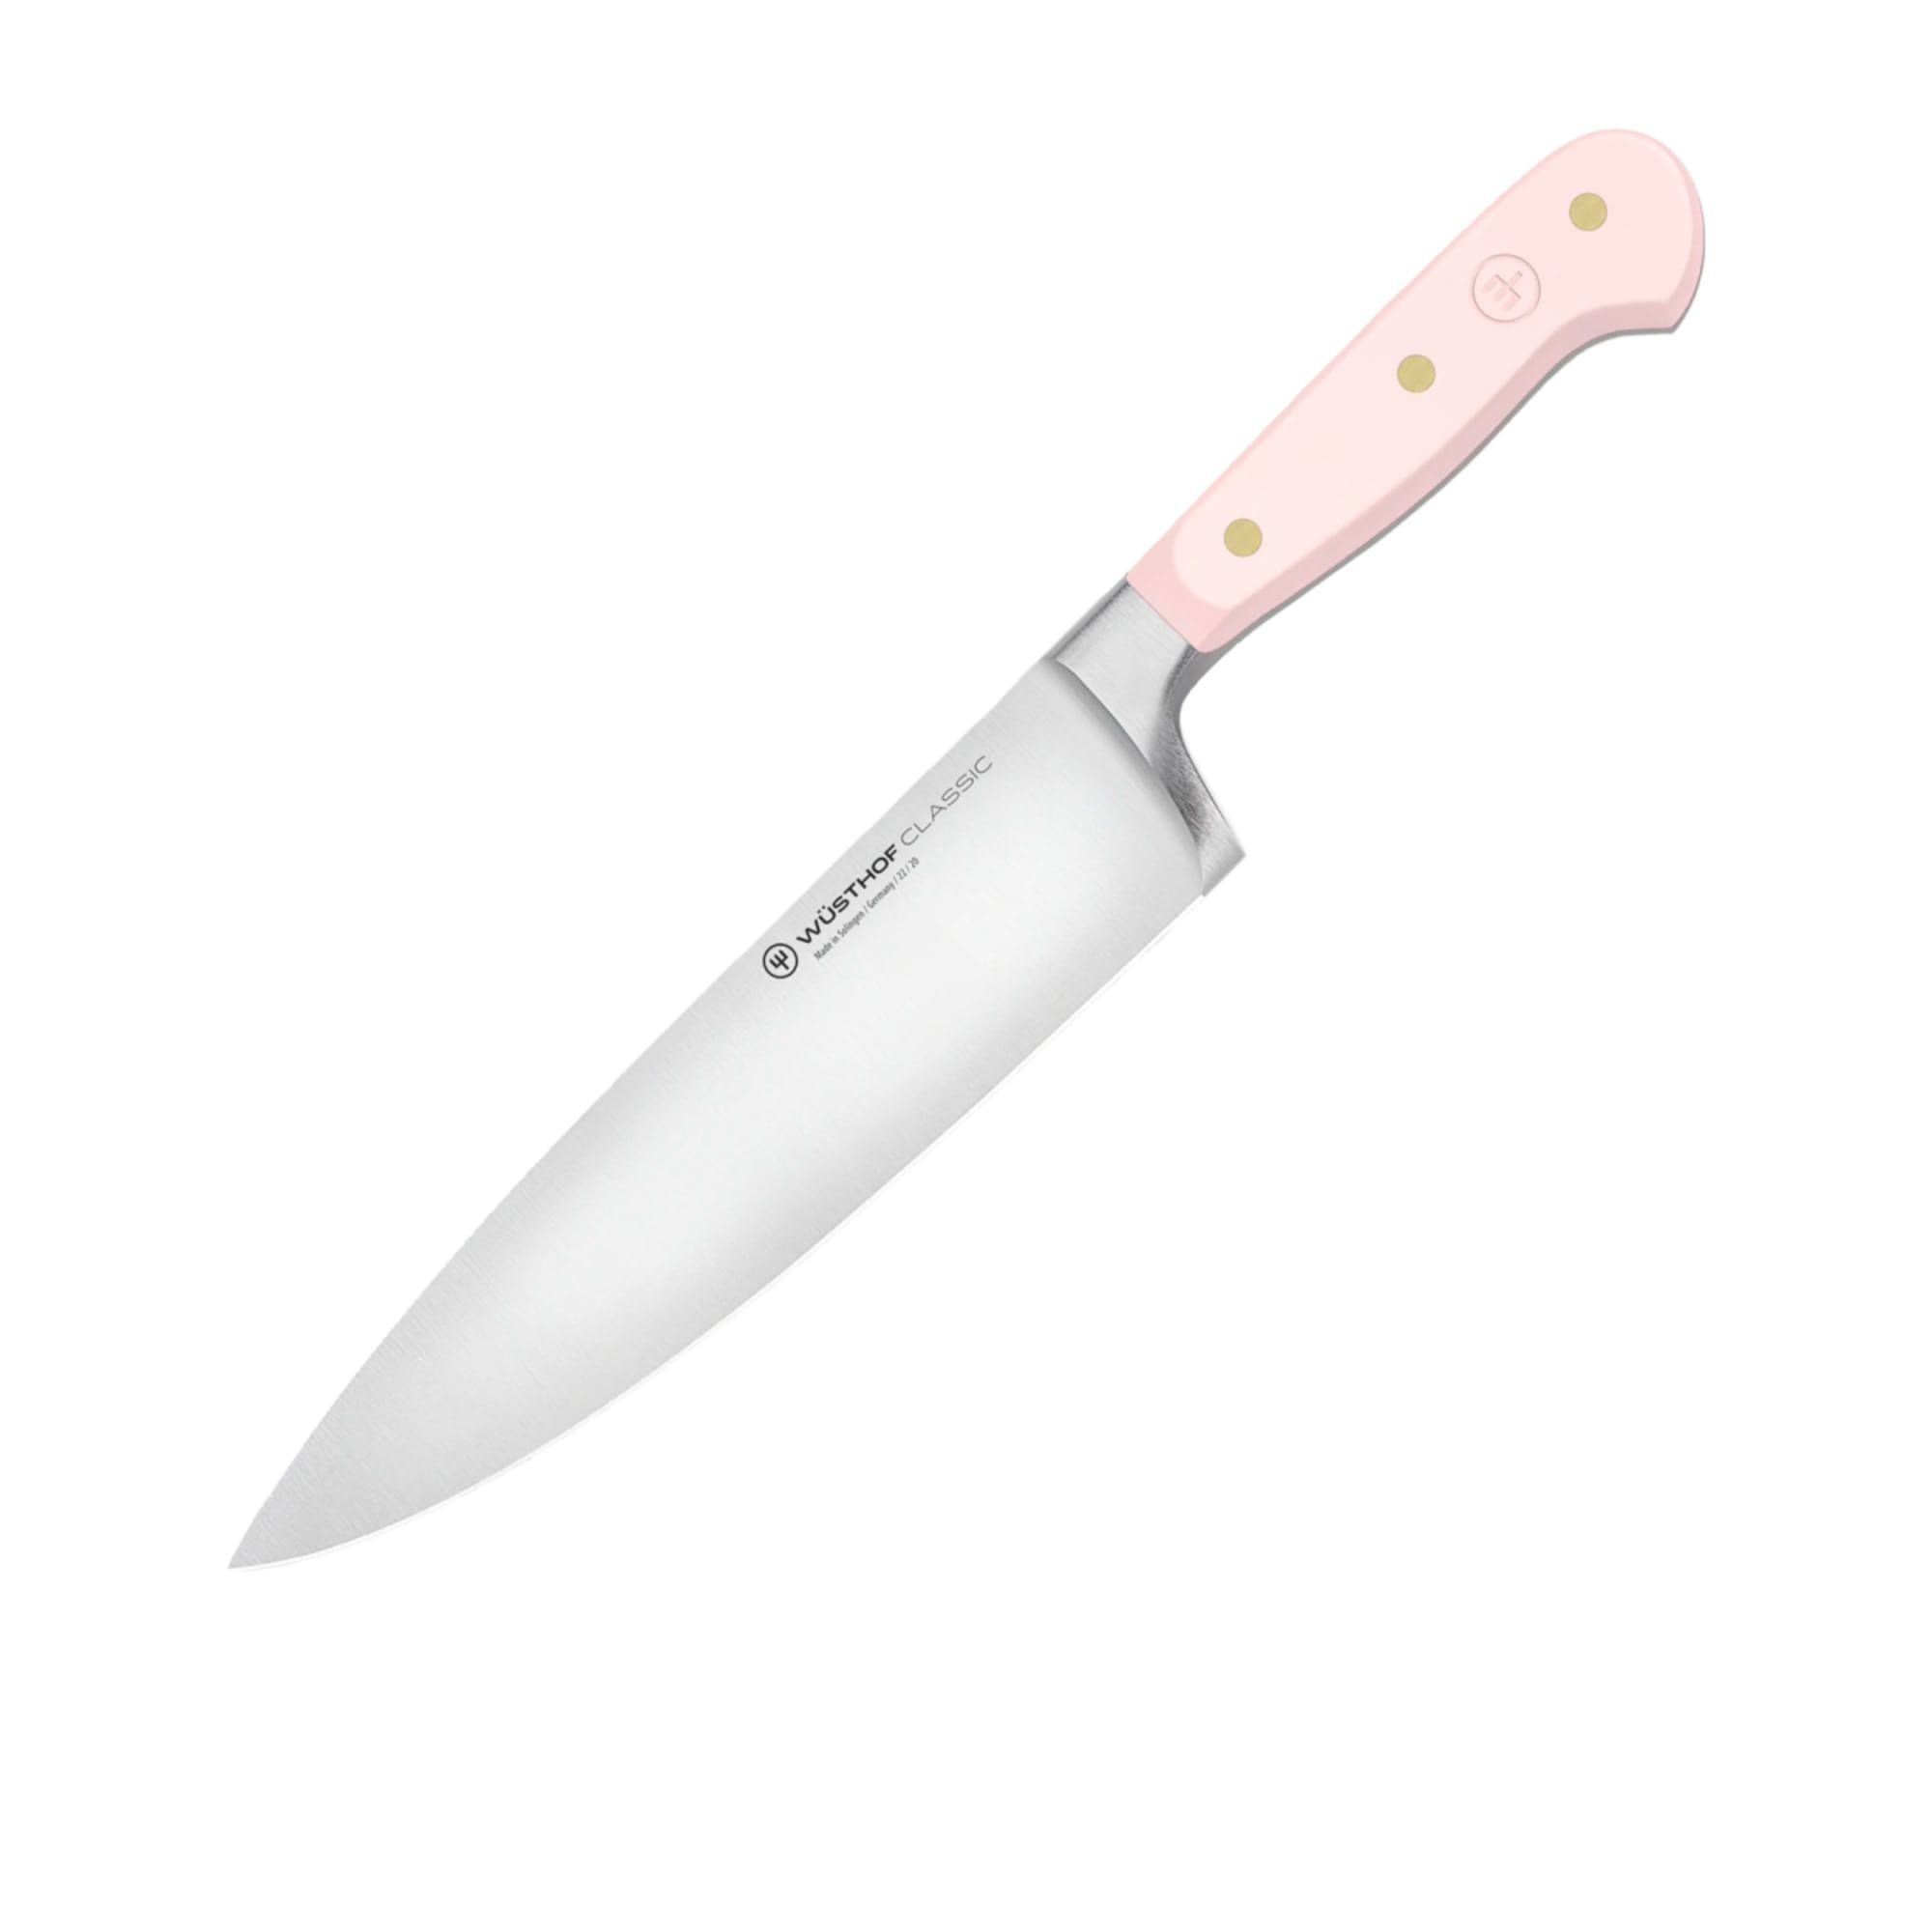 Wusthof Classic Colour Chef's Knife 20cm Pink Himalayan Salt Image 1